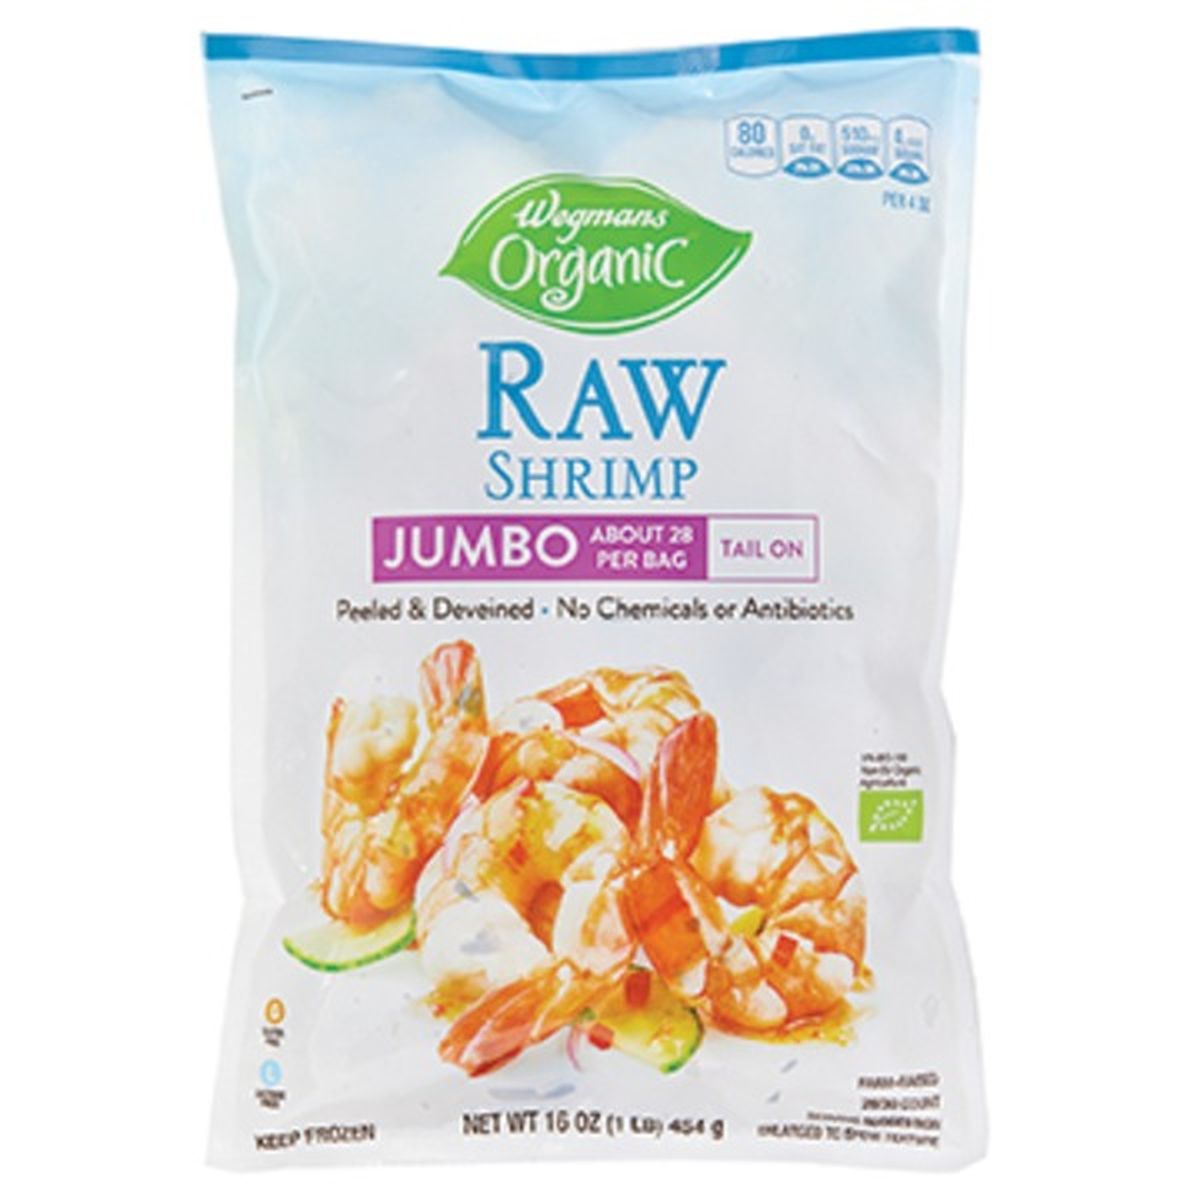 Calories in Wegmans Organic Raw Jumbo Shrimp, 26-30 Count